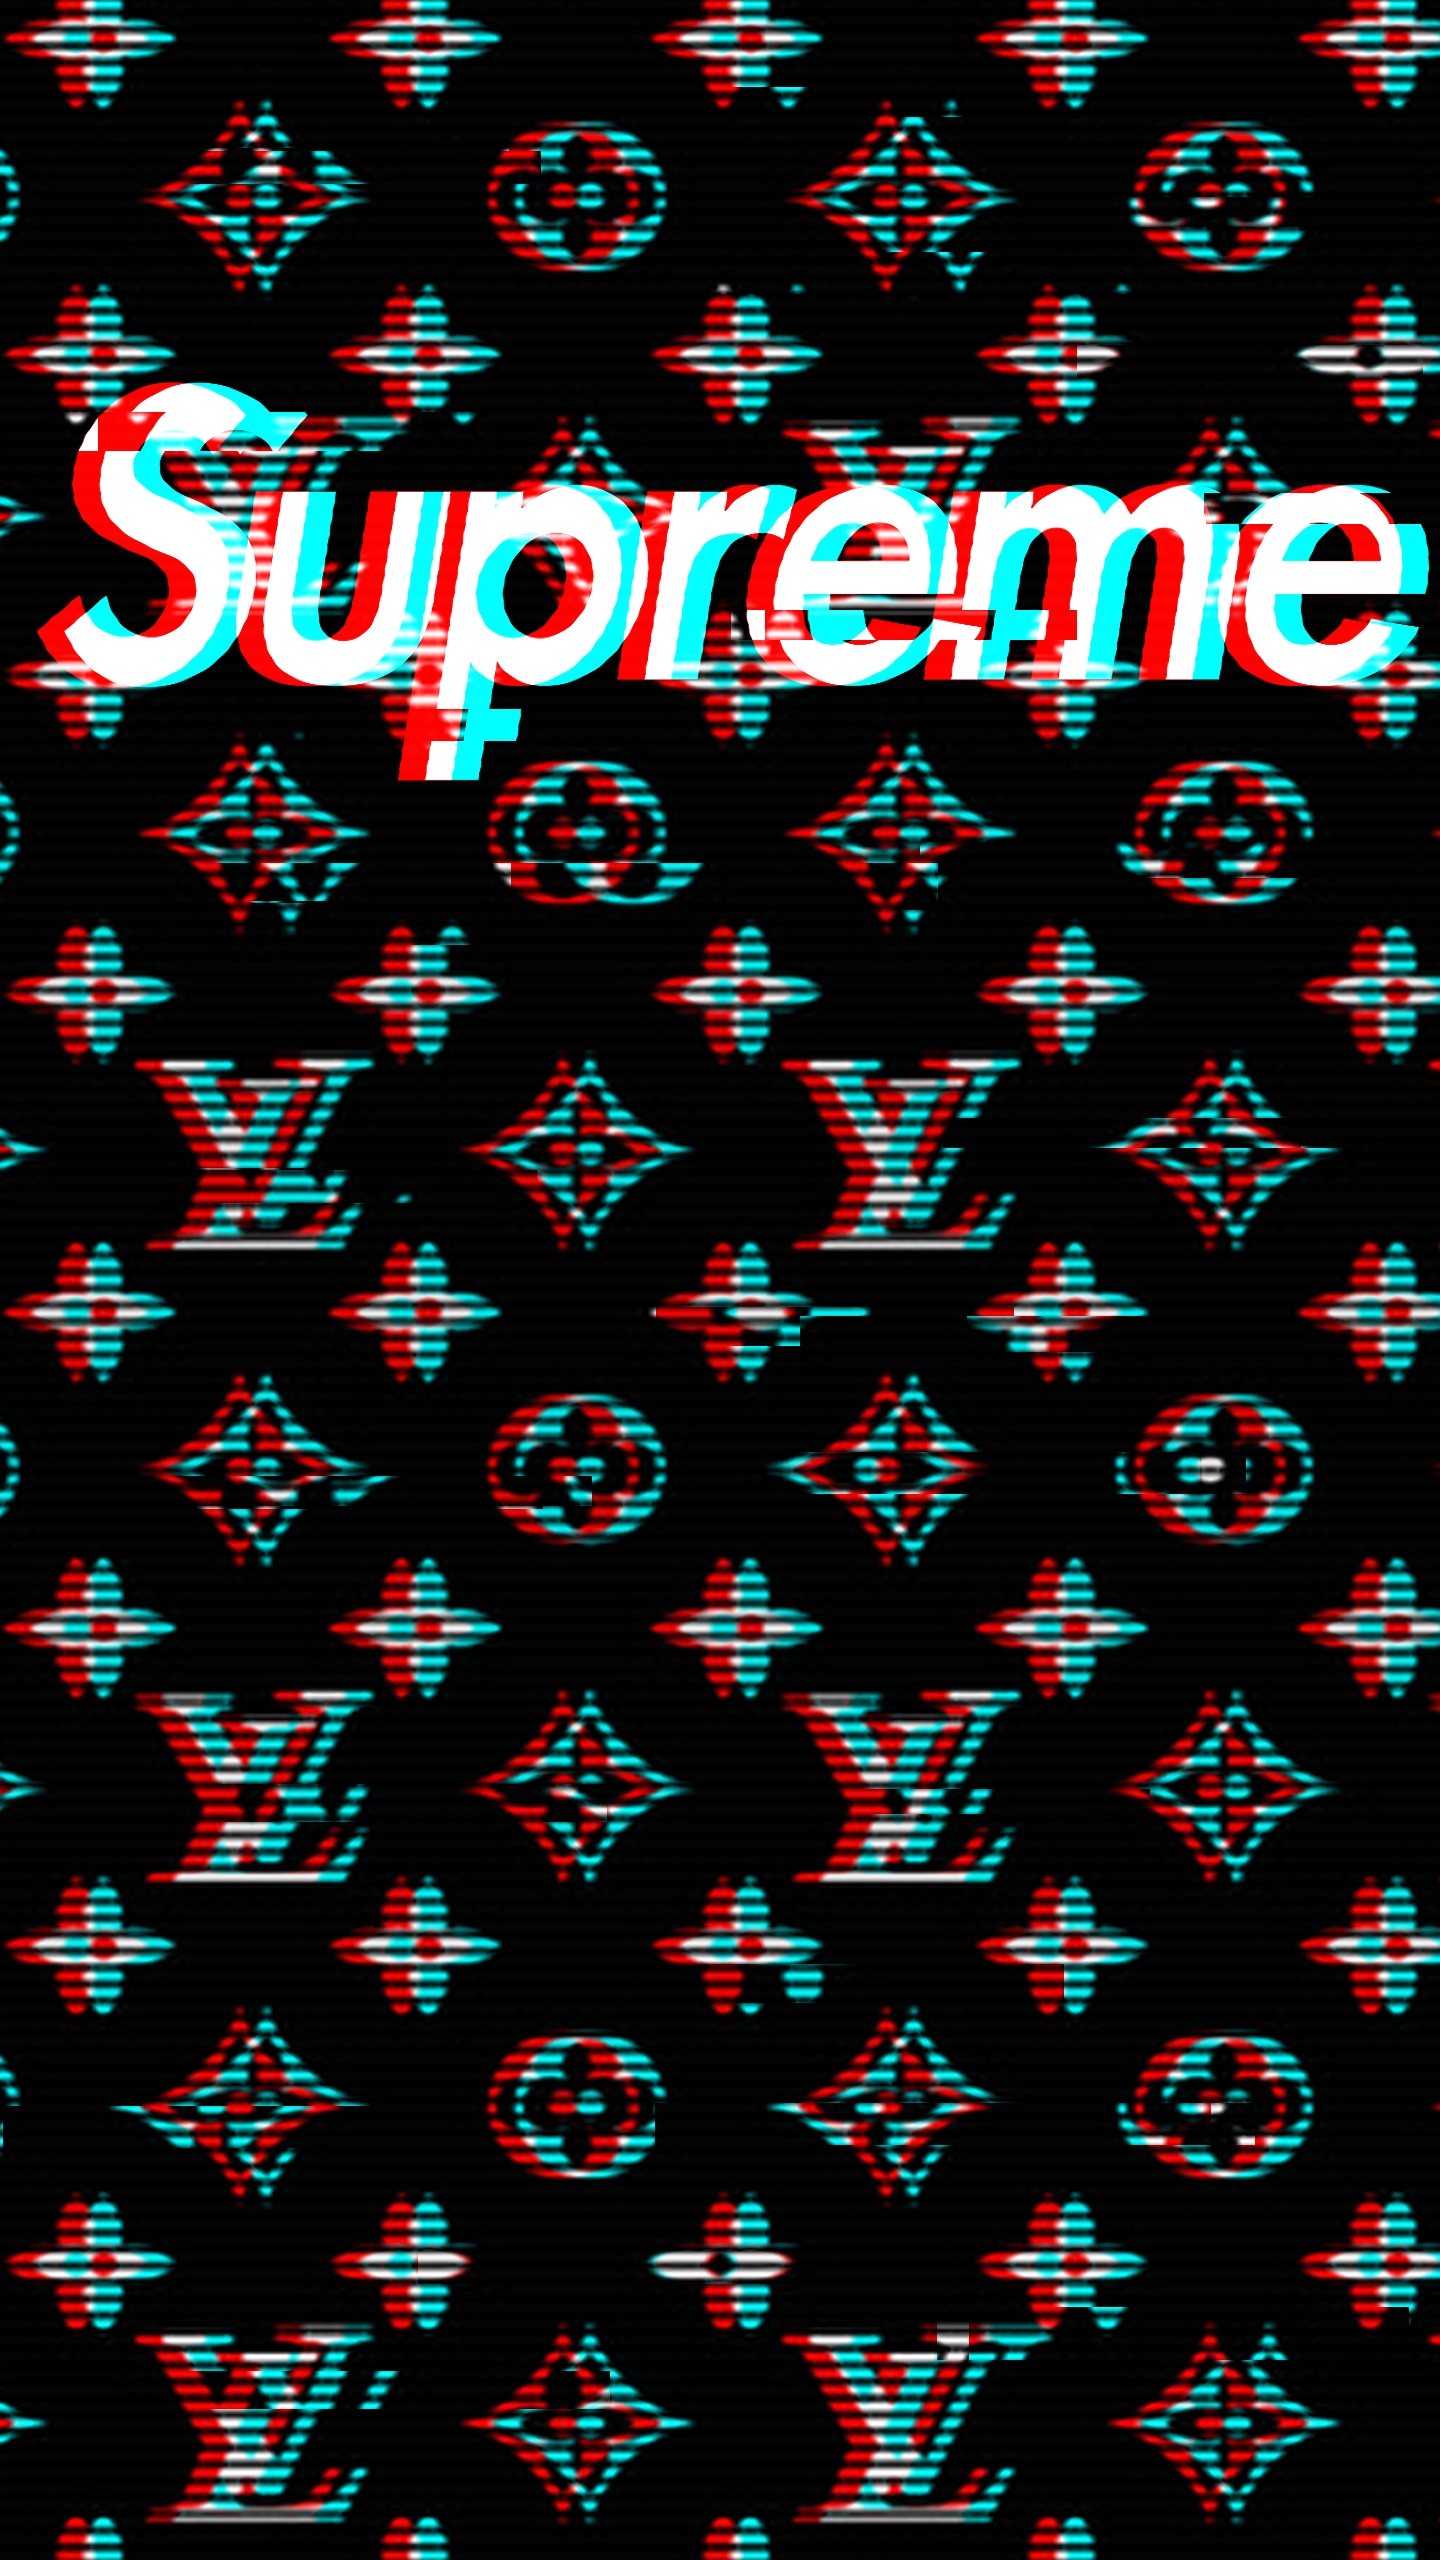 40 Supreme Wallpaper Hd Ideas Supreme Wallpaper Supreme Wallpaper Hd Supreme Iphone Wallpaper